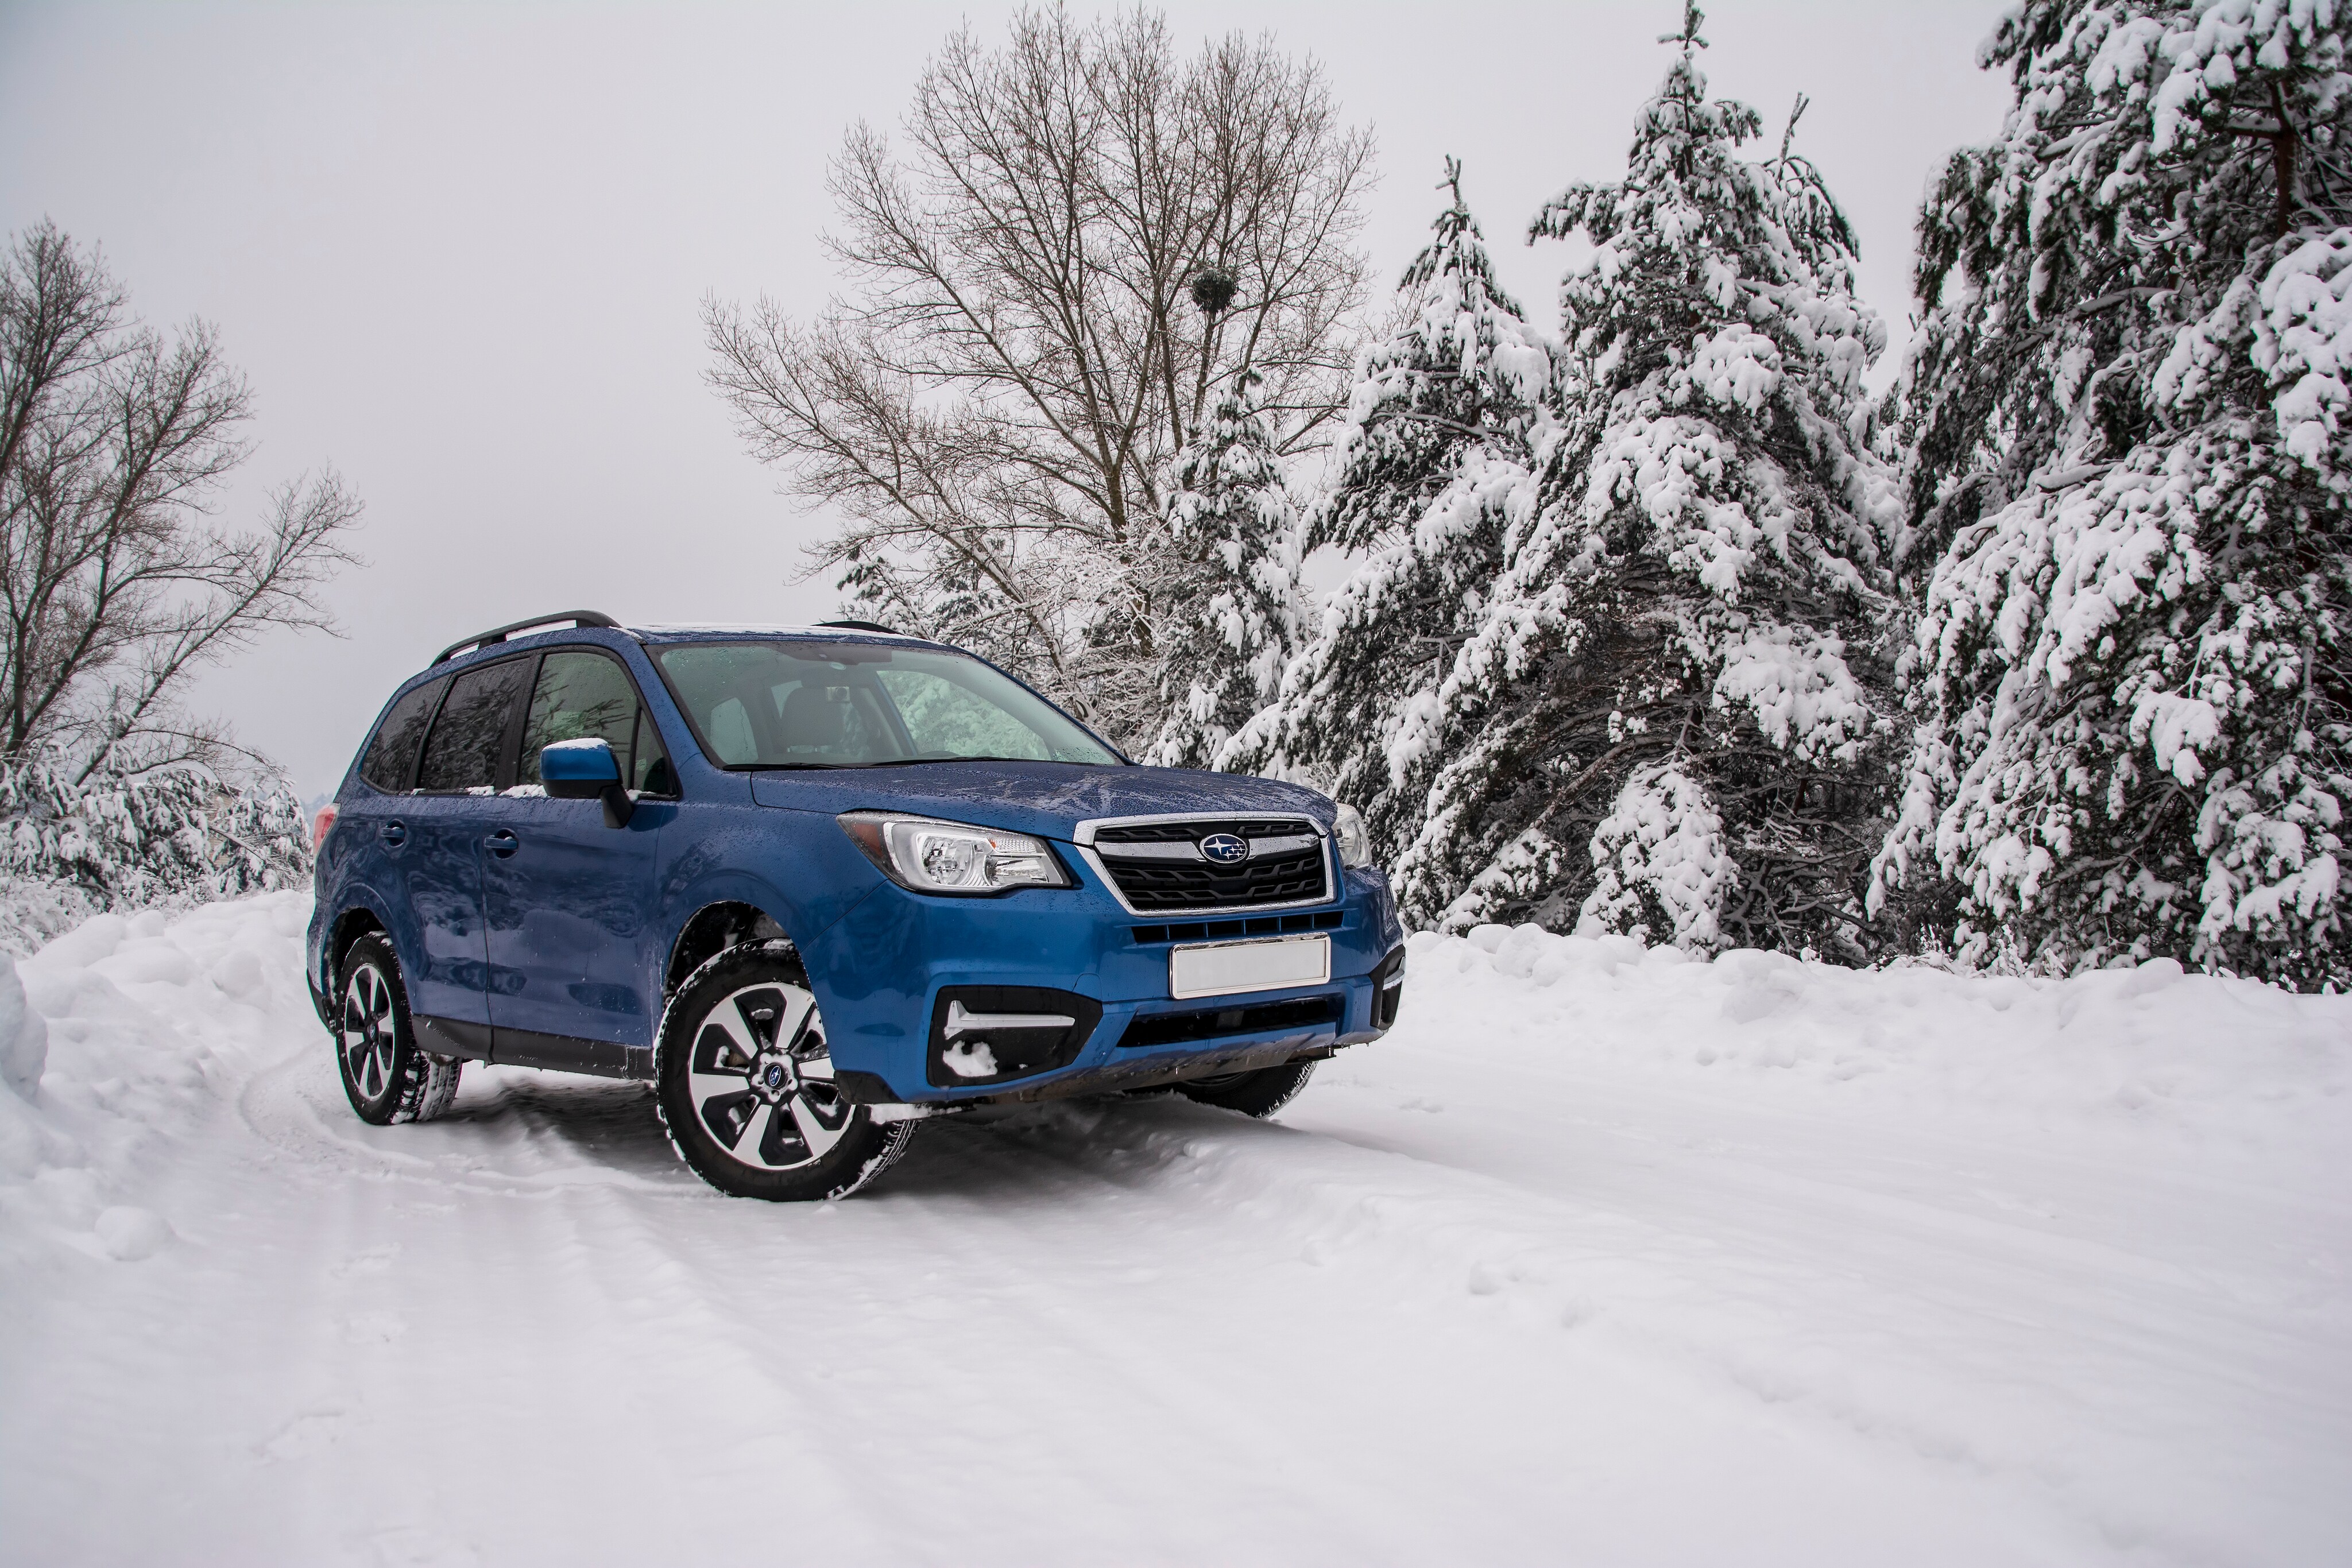 Subaru Crosstrek in Snow